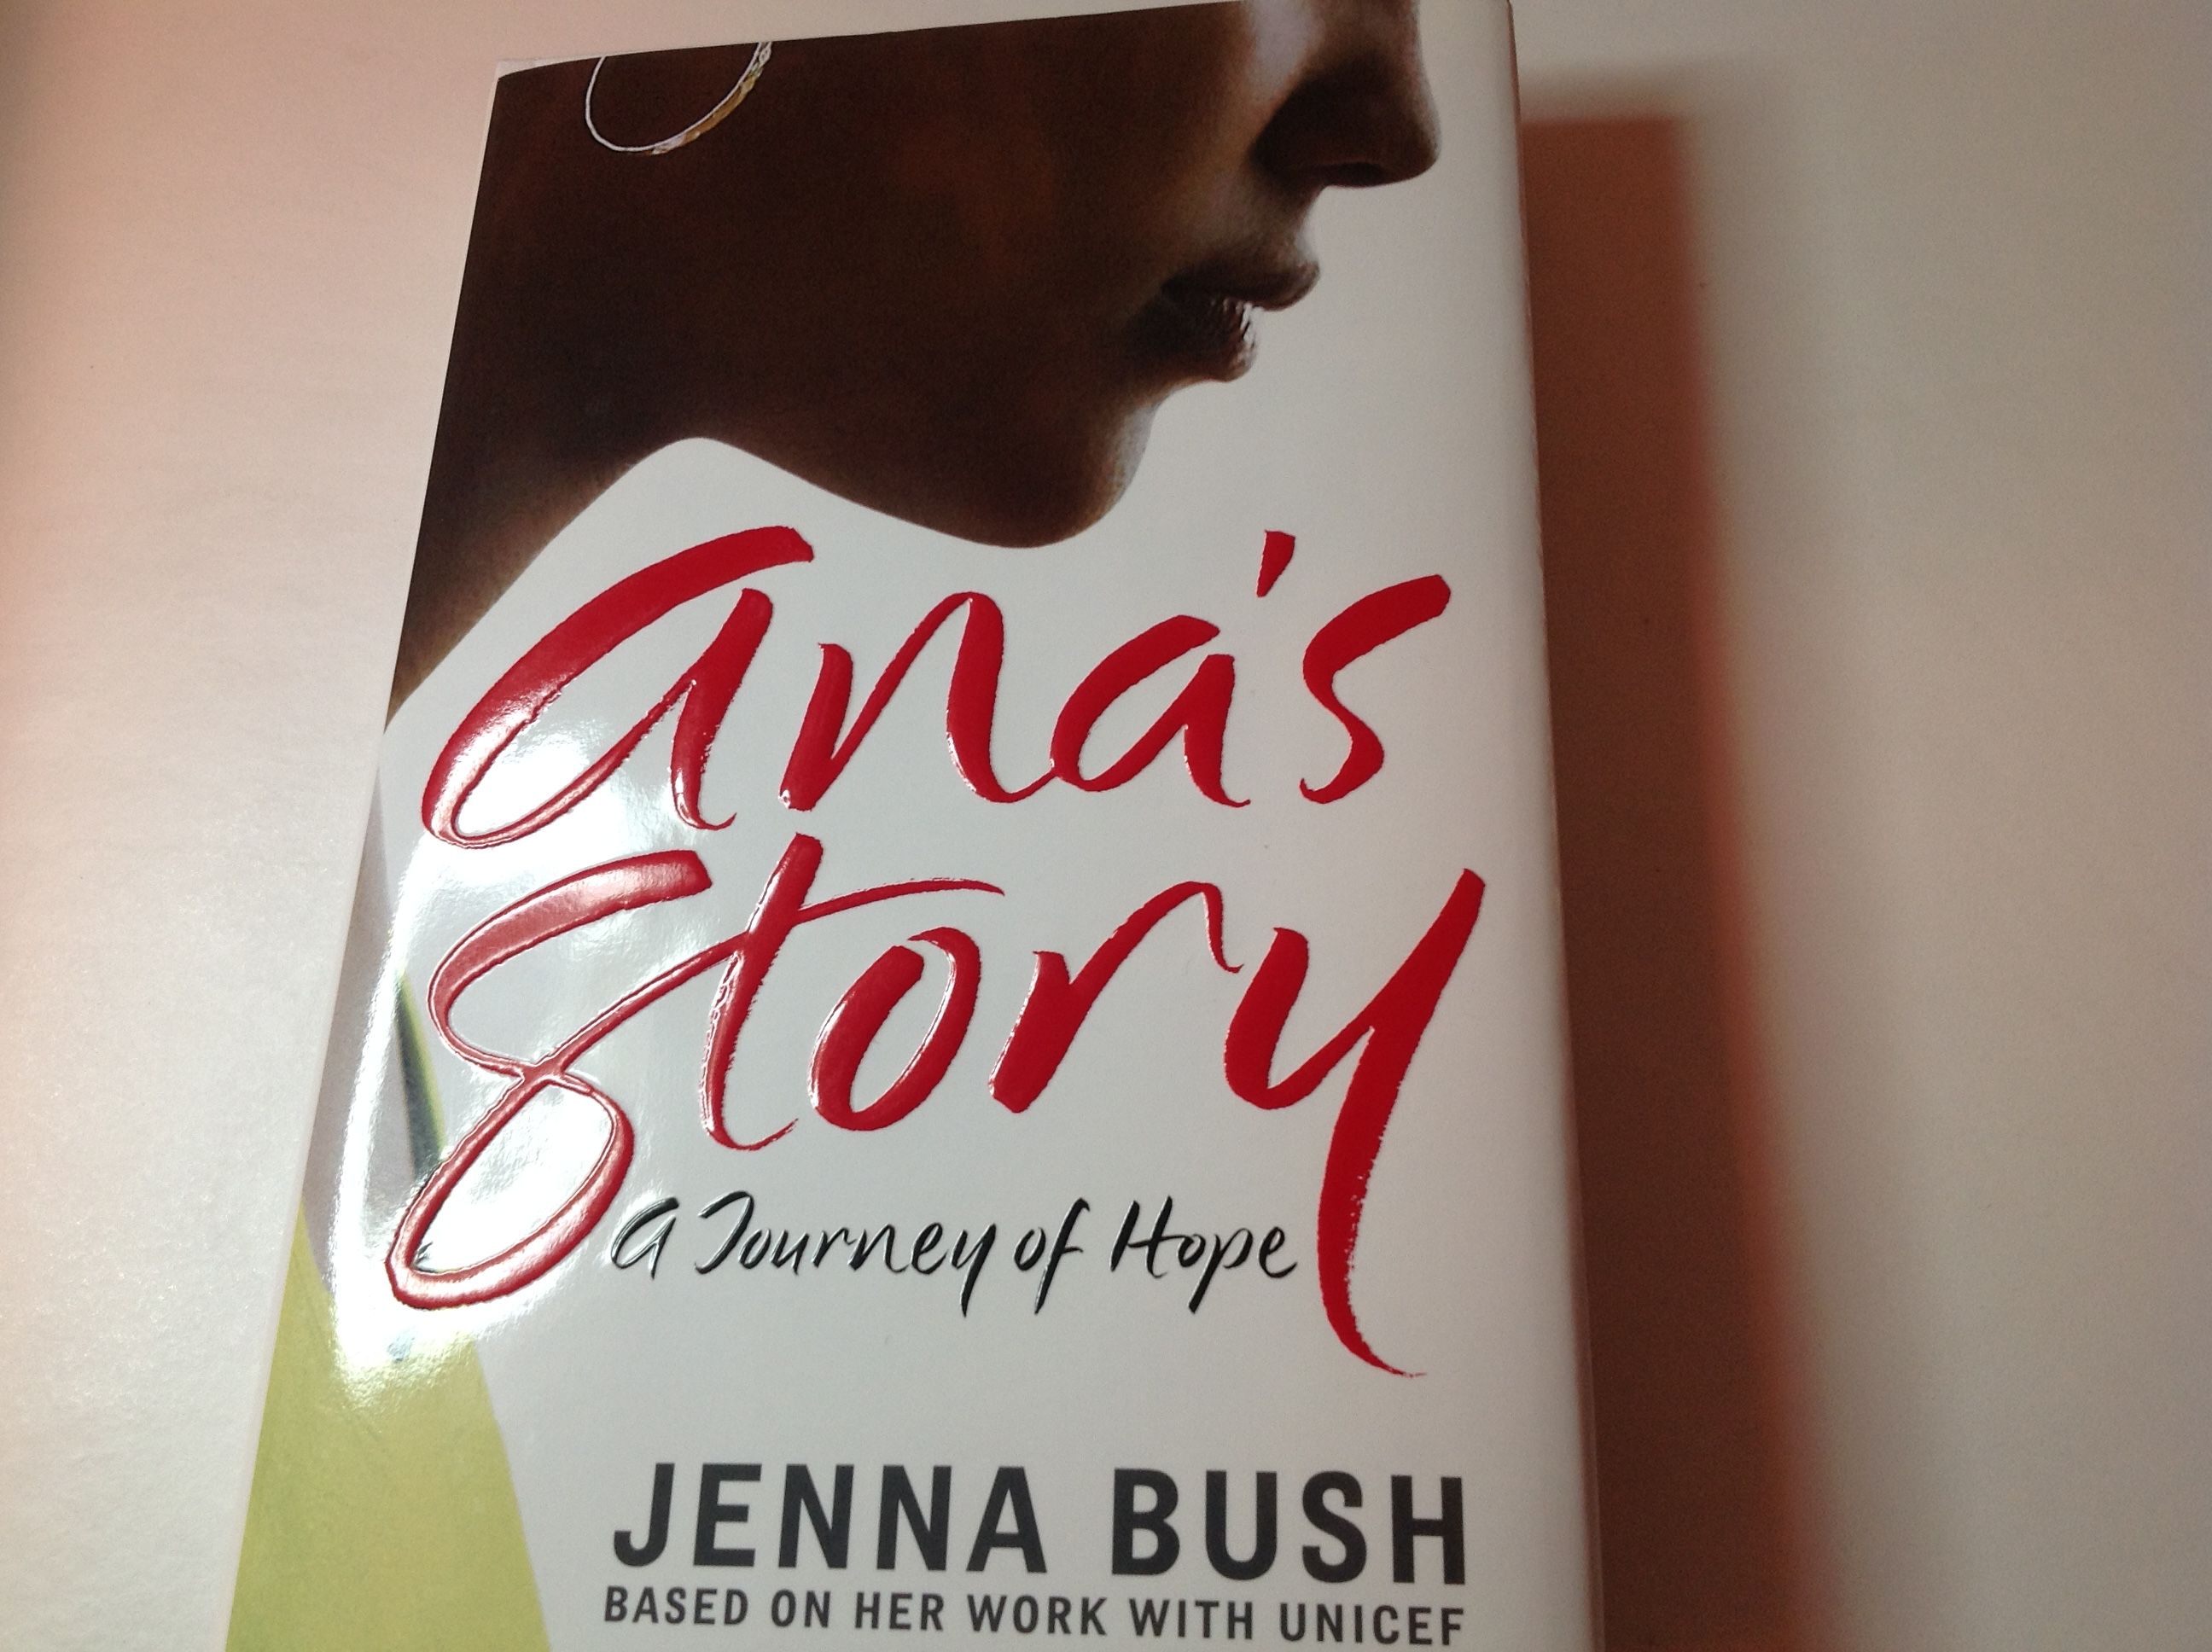 ana's story a journey of hope